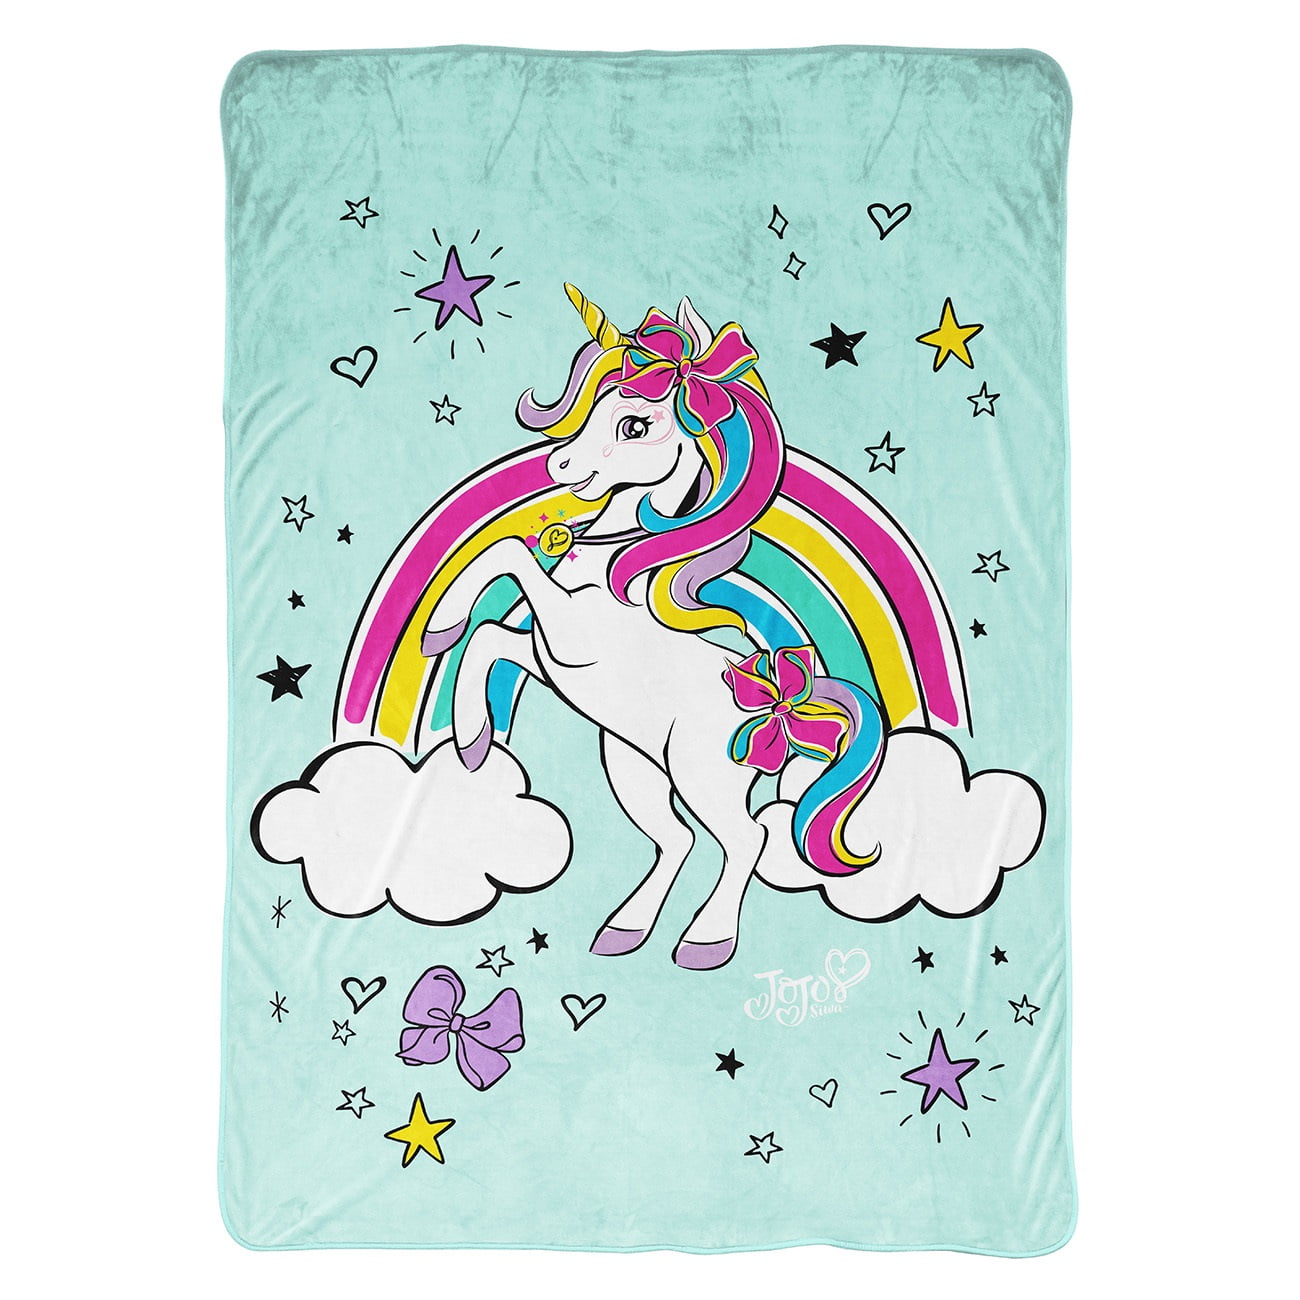 Jojo Siwa Rainbow Be You Cool Round Towel Tapestry Yoga Beach Mat Blanket 